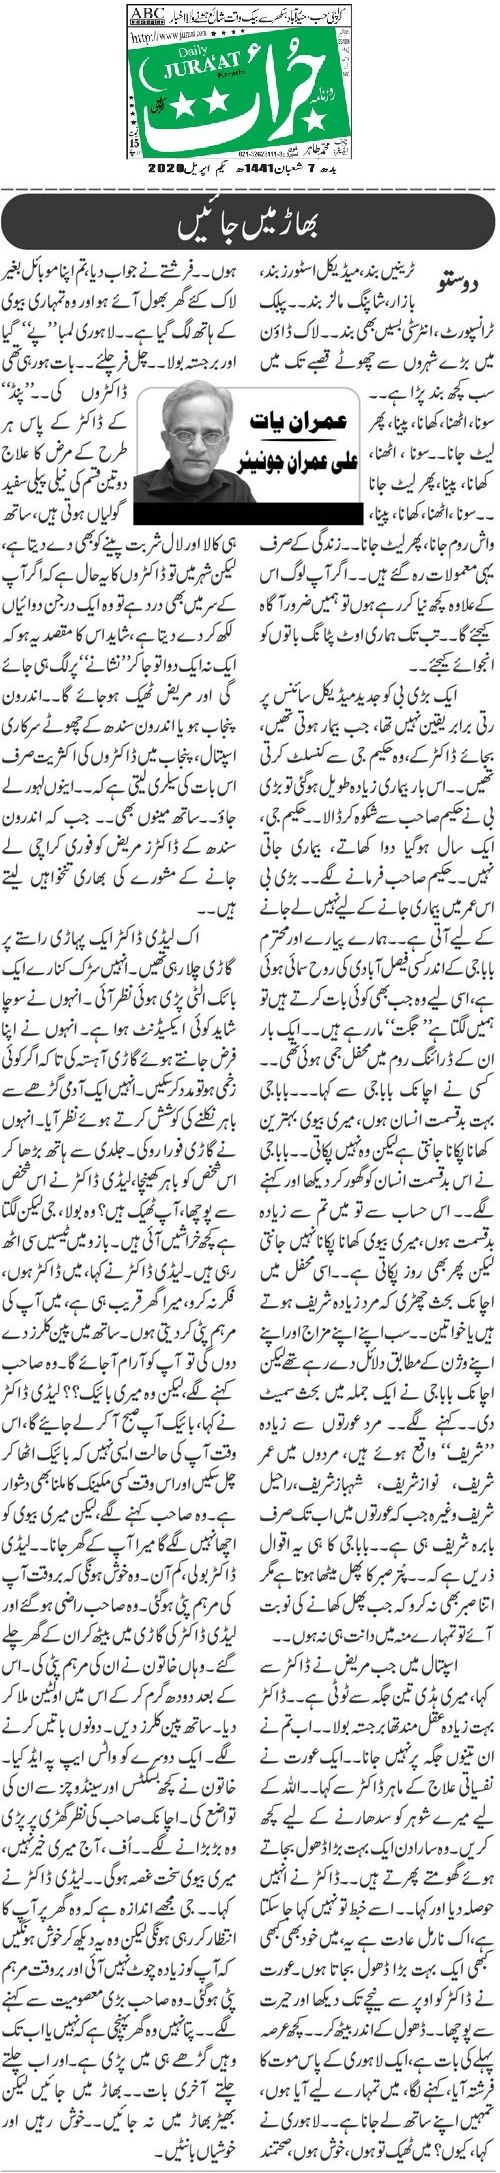 Bhaar main jayen by Ali Imran Junior Imran Yaat Daily Jurrat